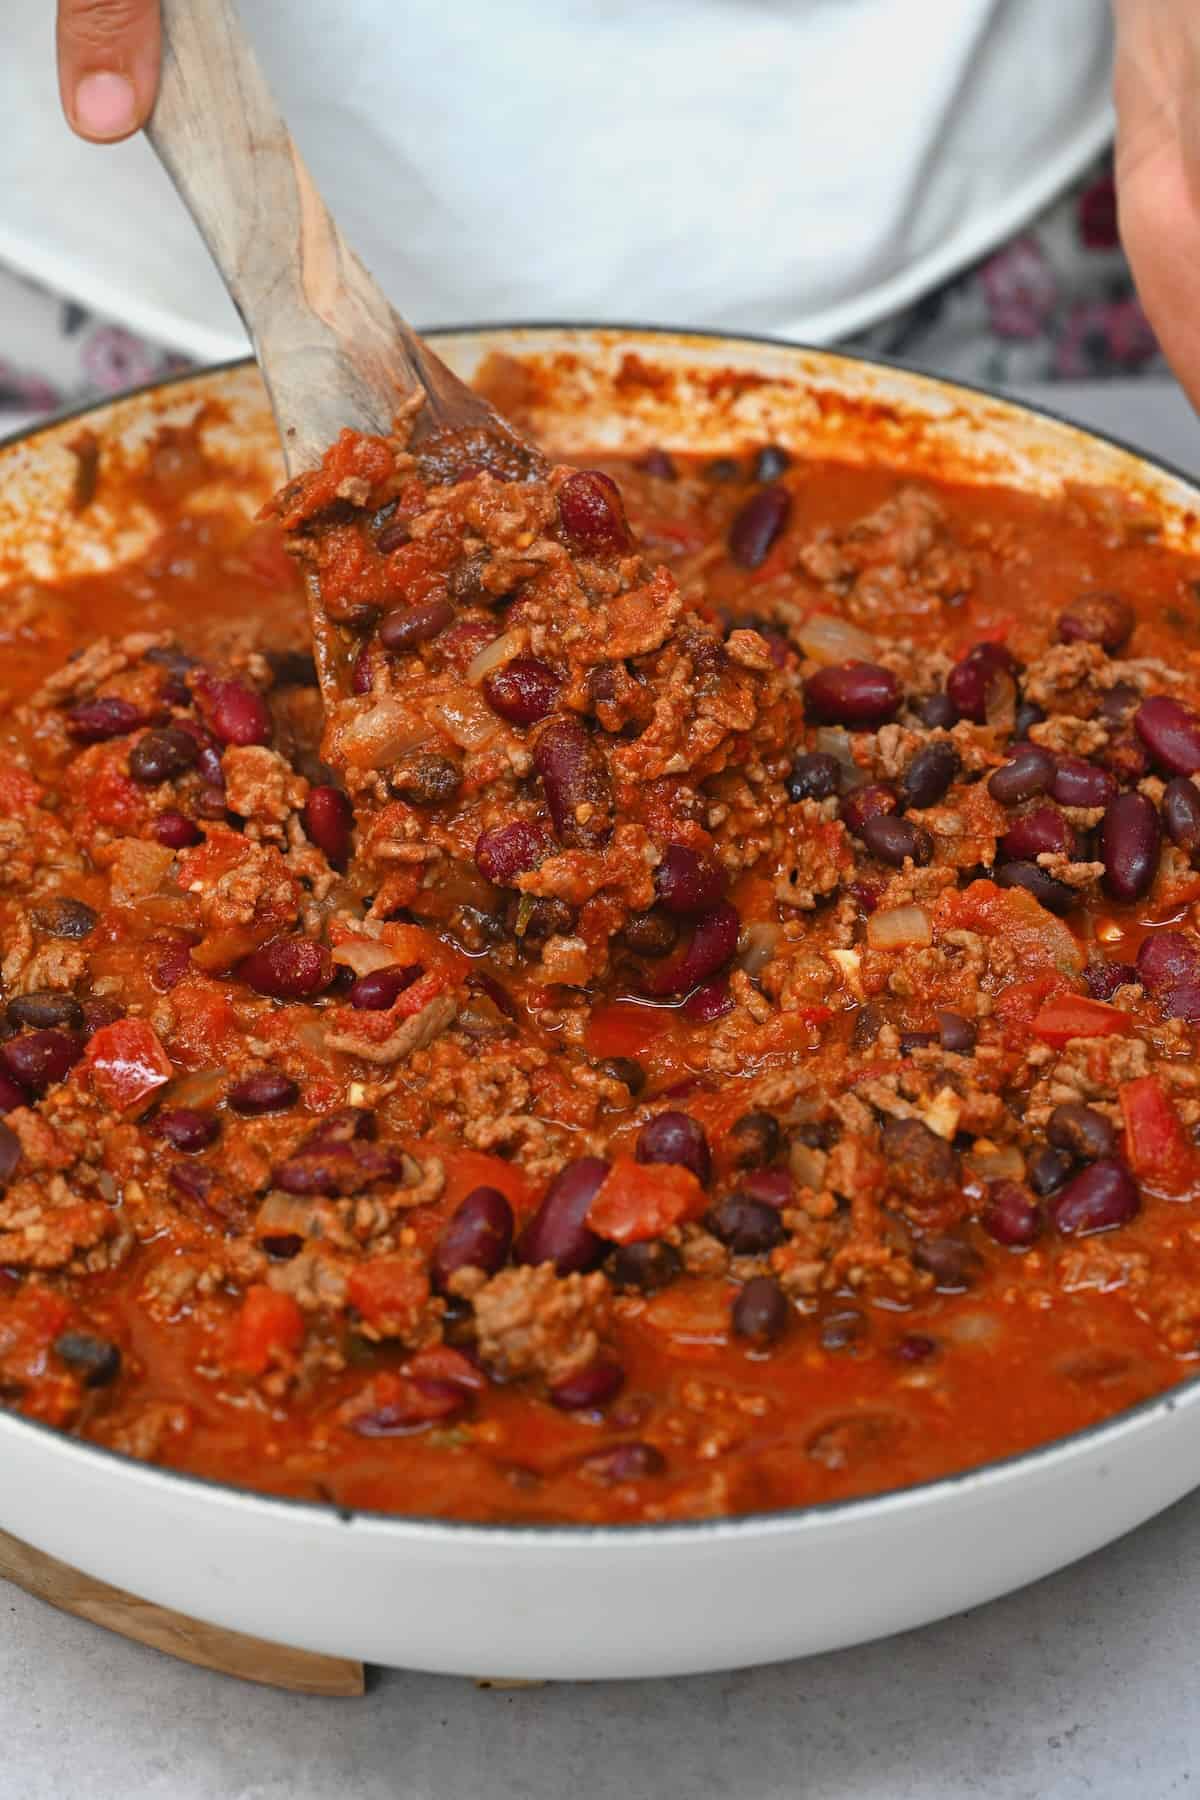 A large saucepan with homemade chili